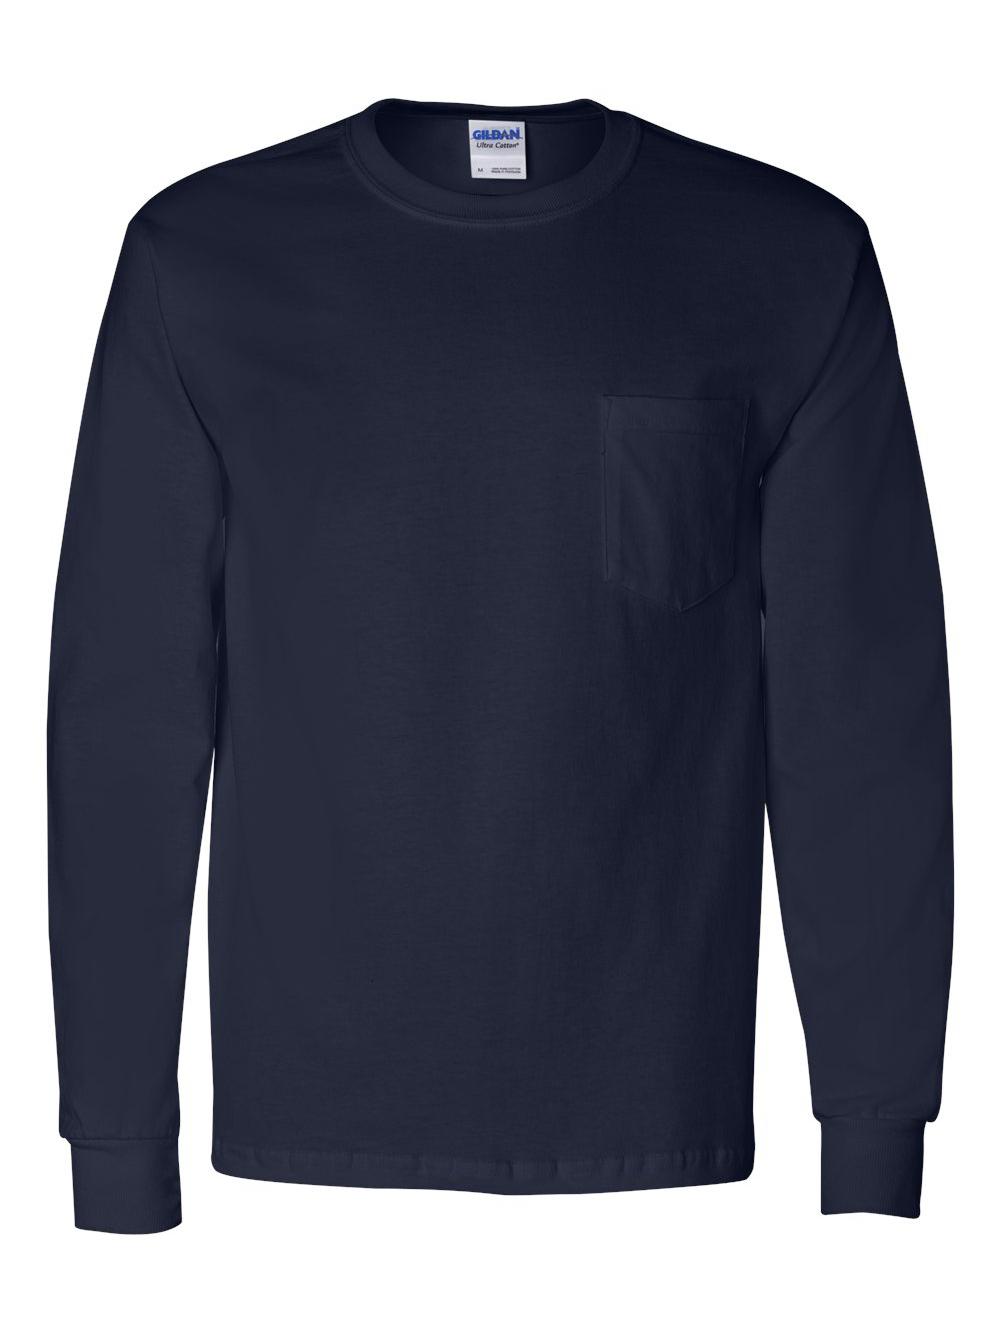 Gildan - Ultra Cotton Long Sleeve Pocket T-Shirt - 2410 - Navy - Size: L - image 2 of 3